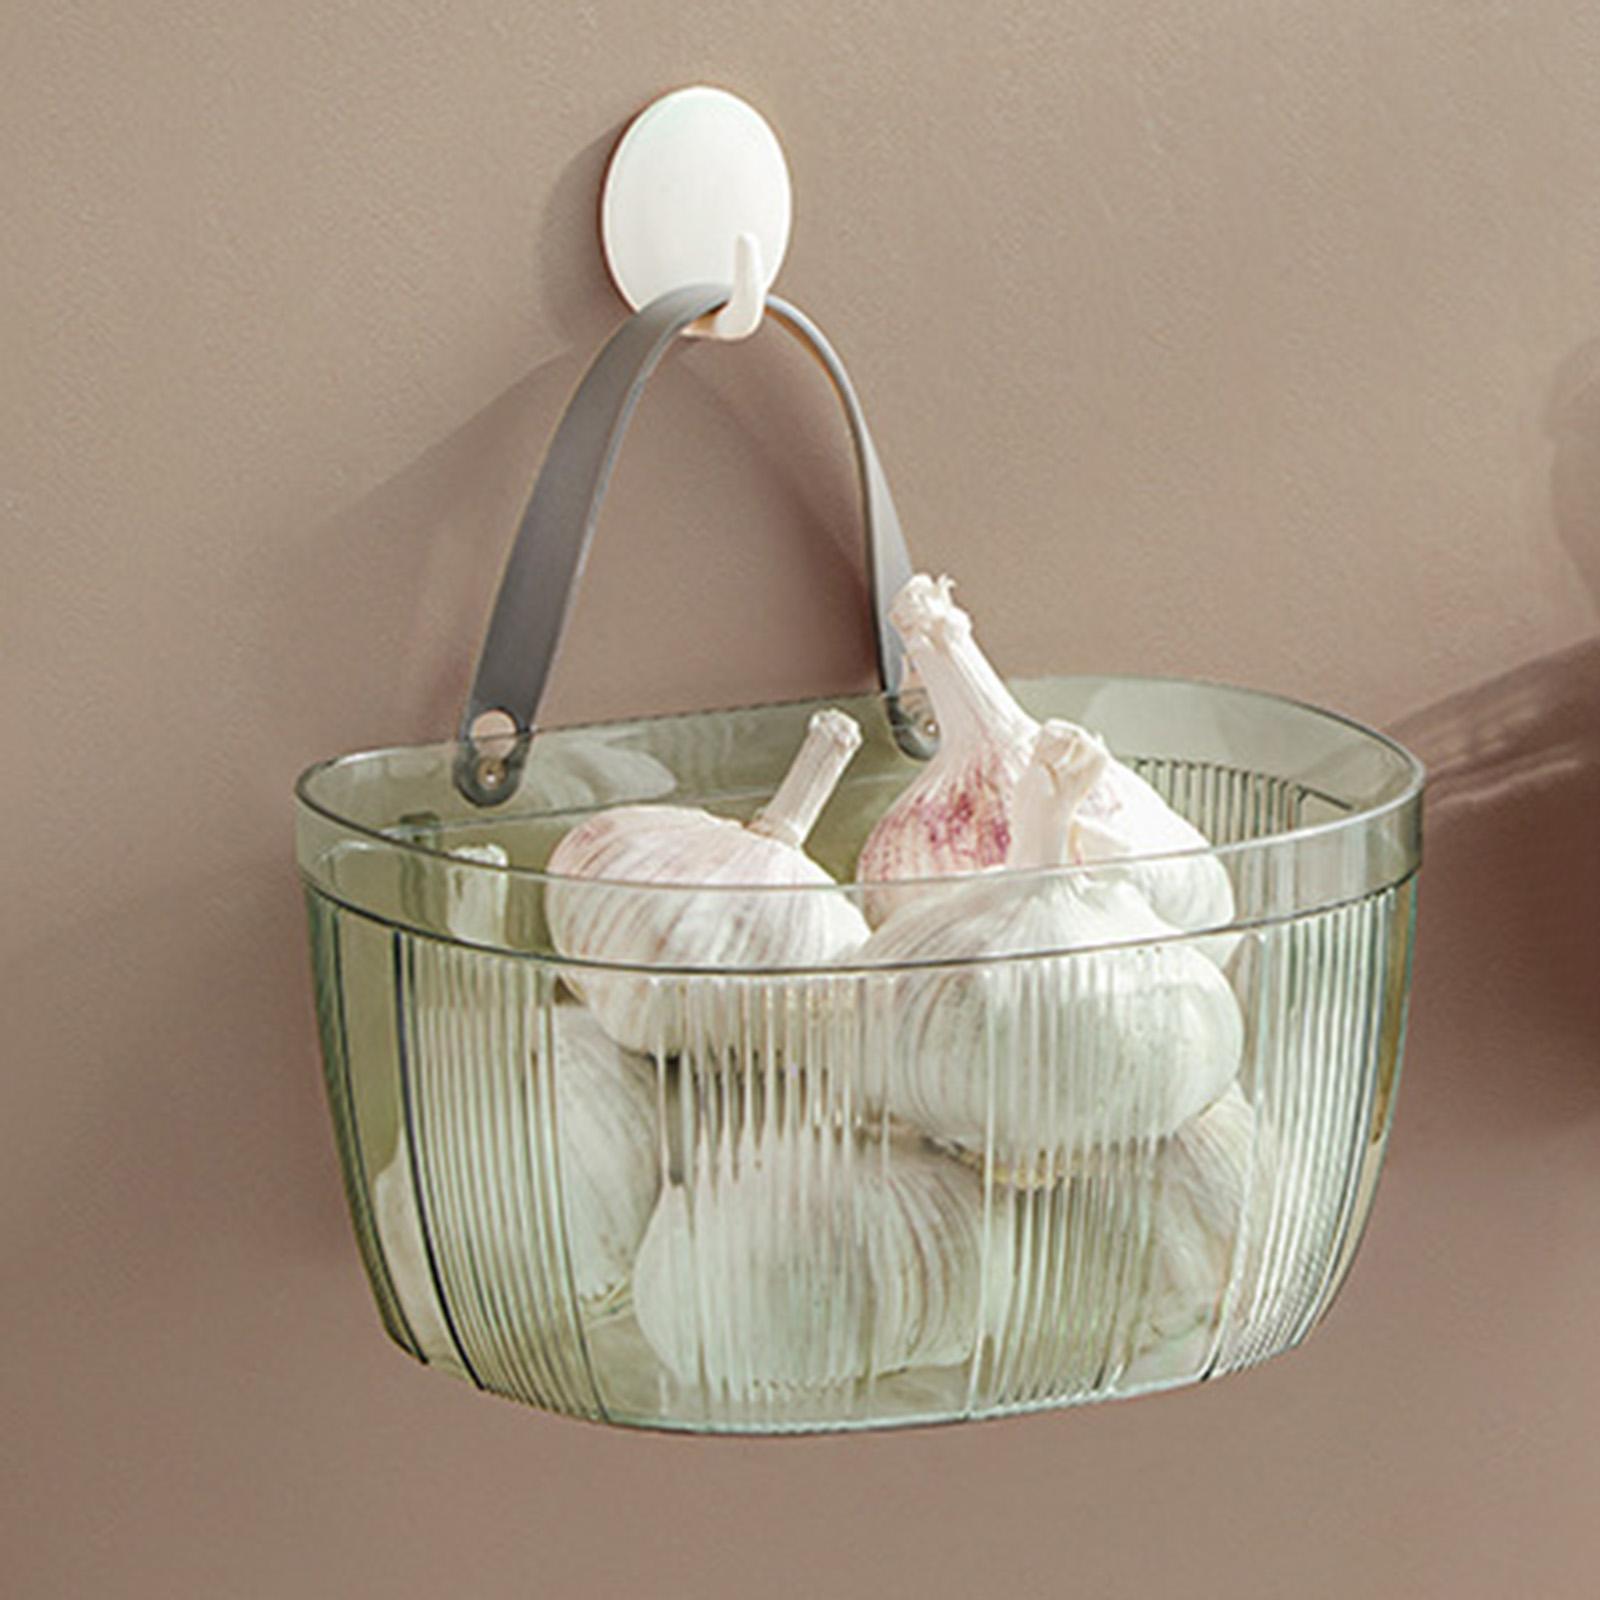 Multifunctional Household Storage Organizer Basket for Bathroom Laundry Room